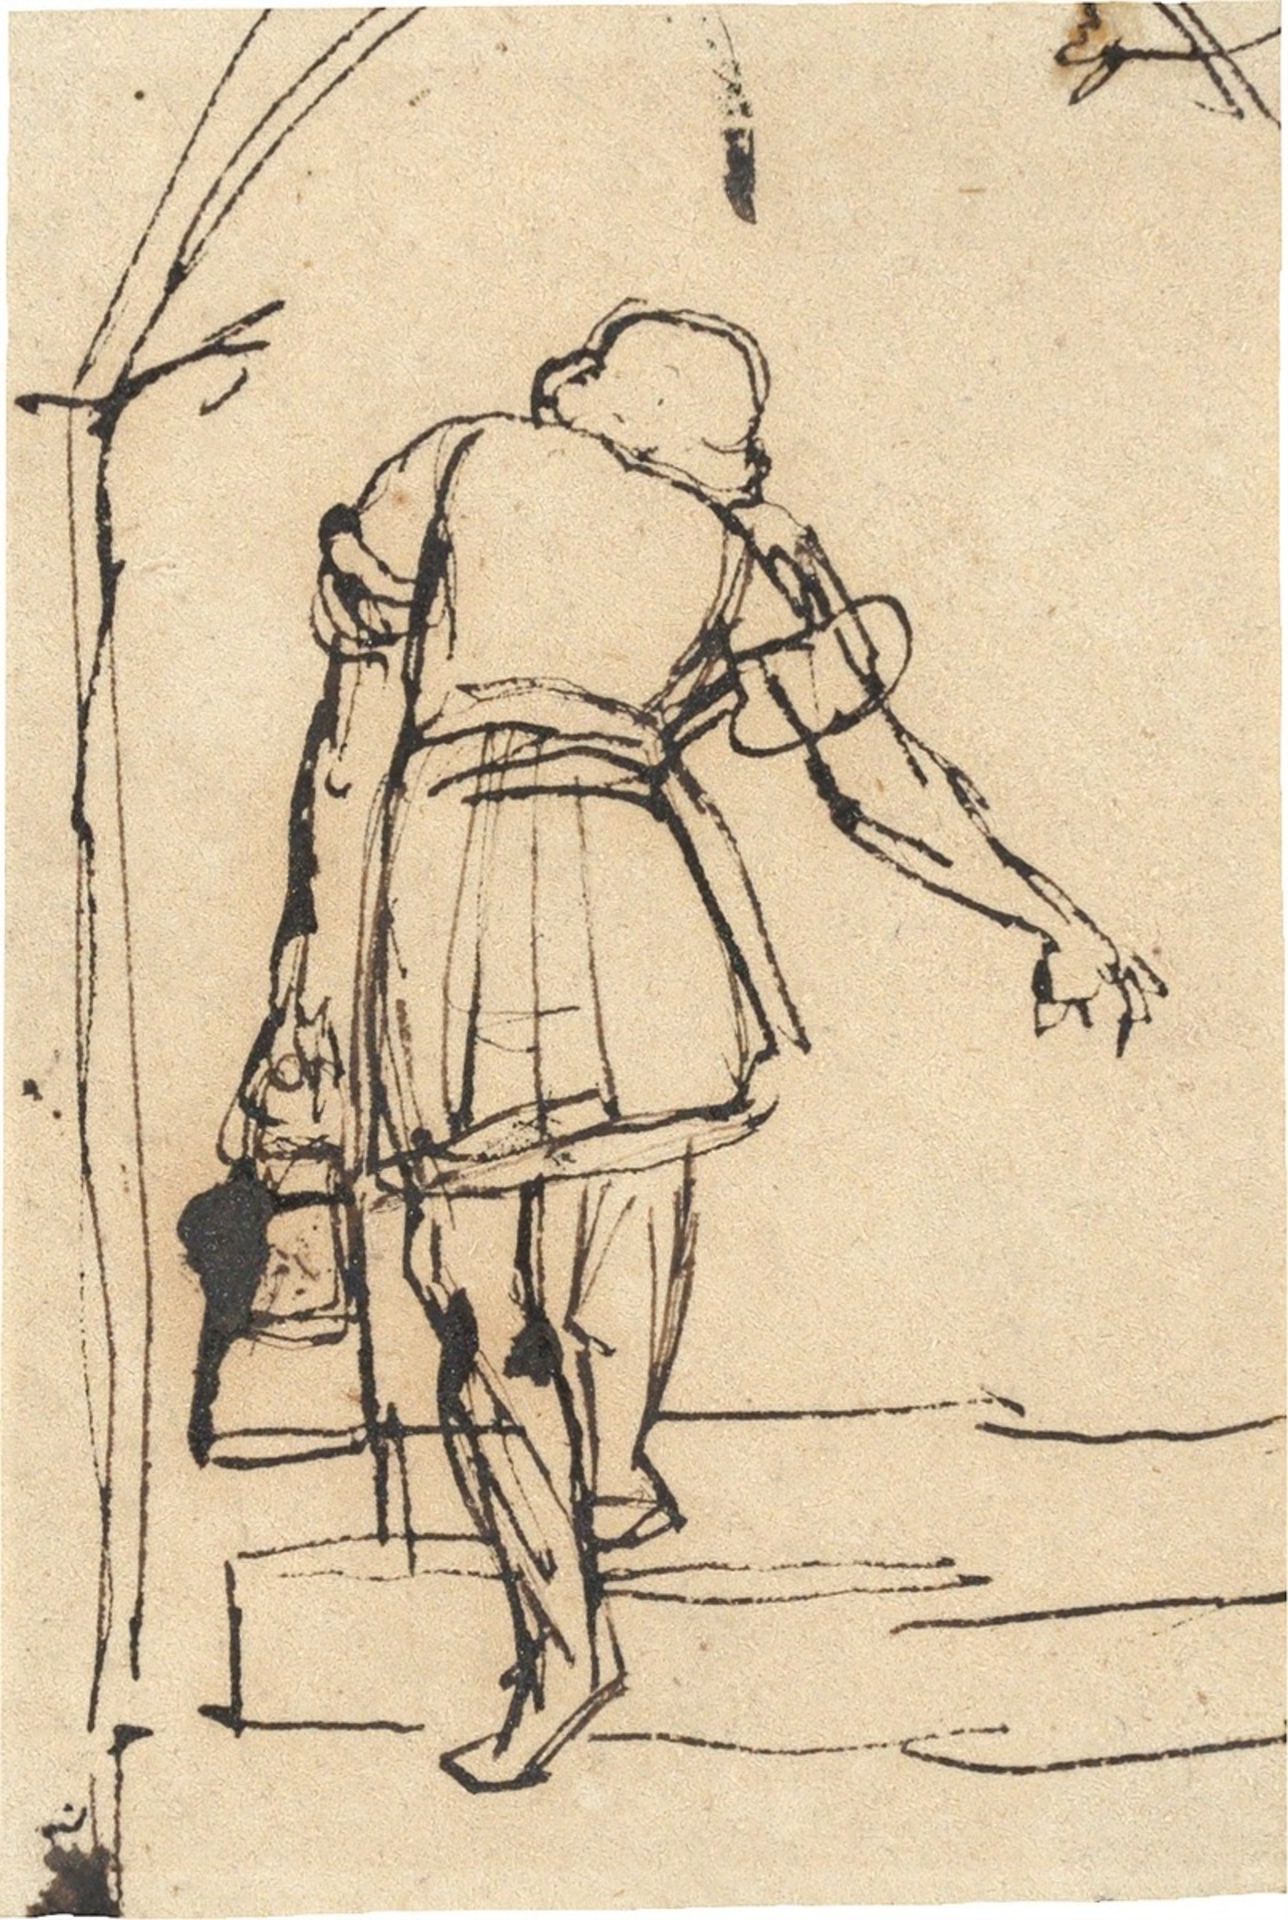 Carl Philipp Fohr (?). Rear view sketch of figure.